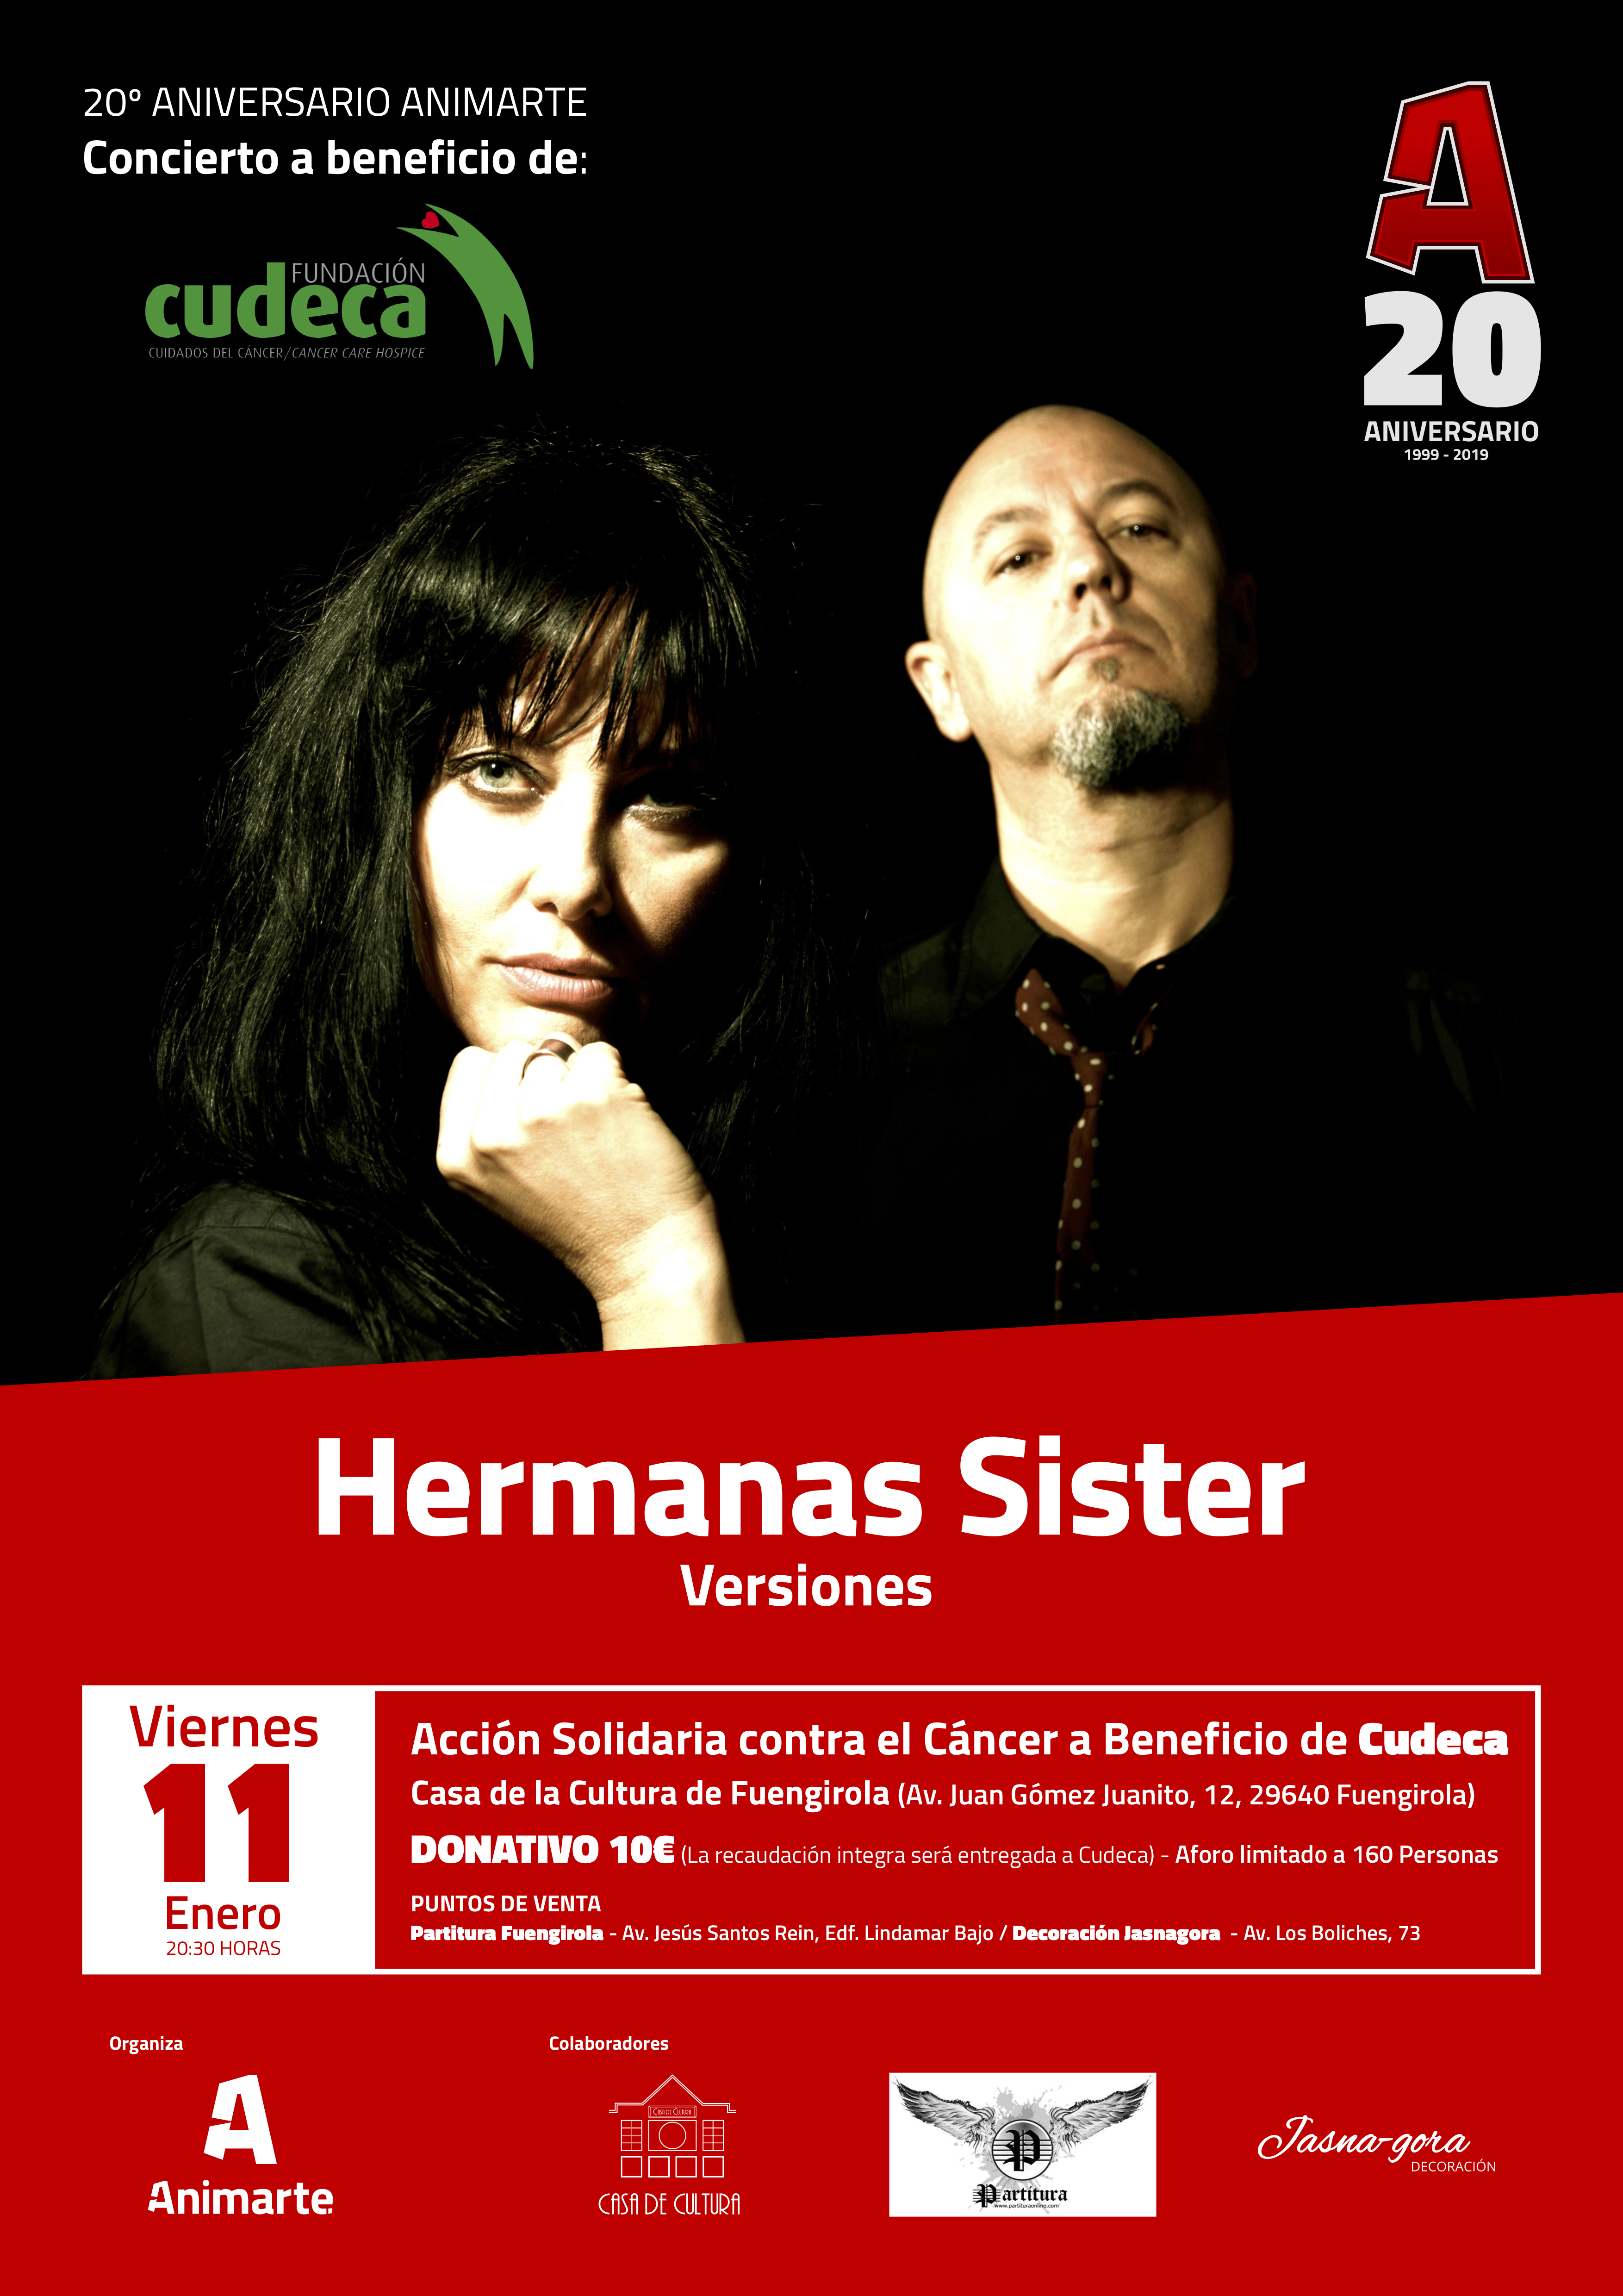 Hermanas Sisters in concert to benefit CUDECA